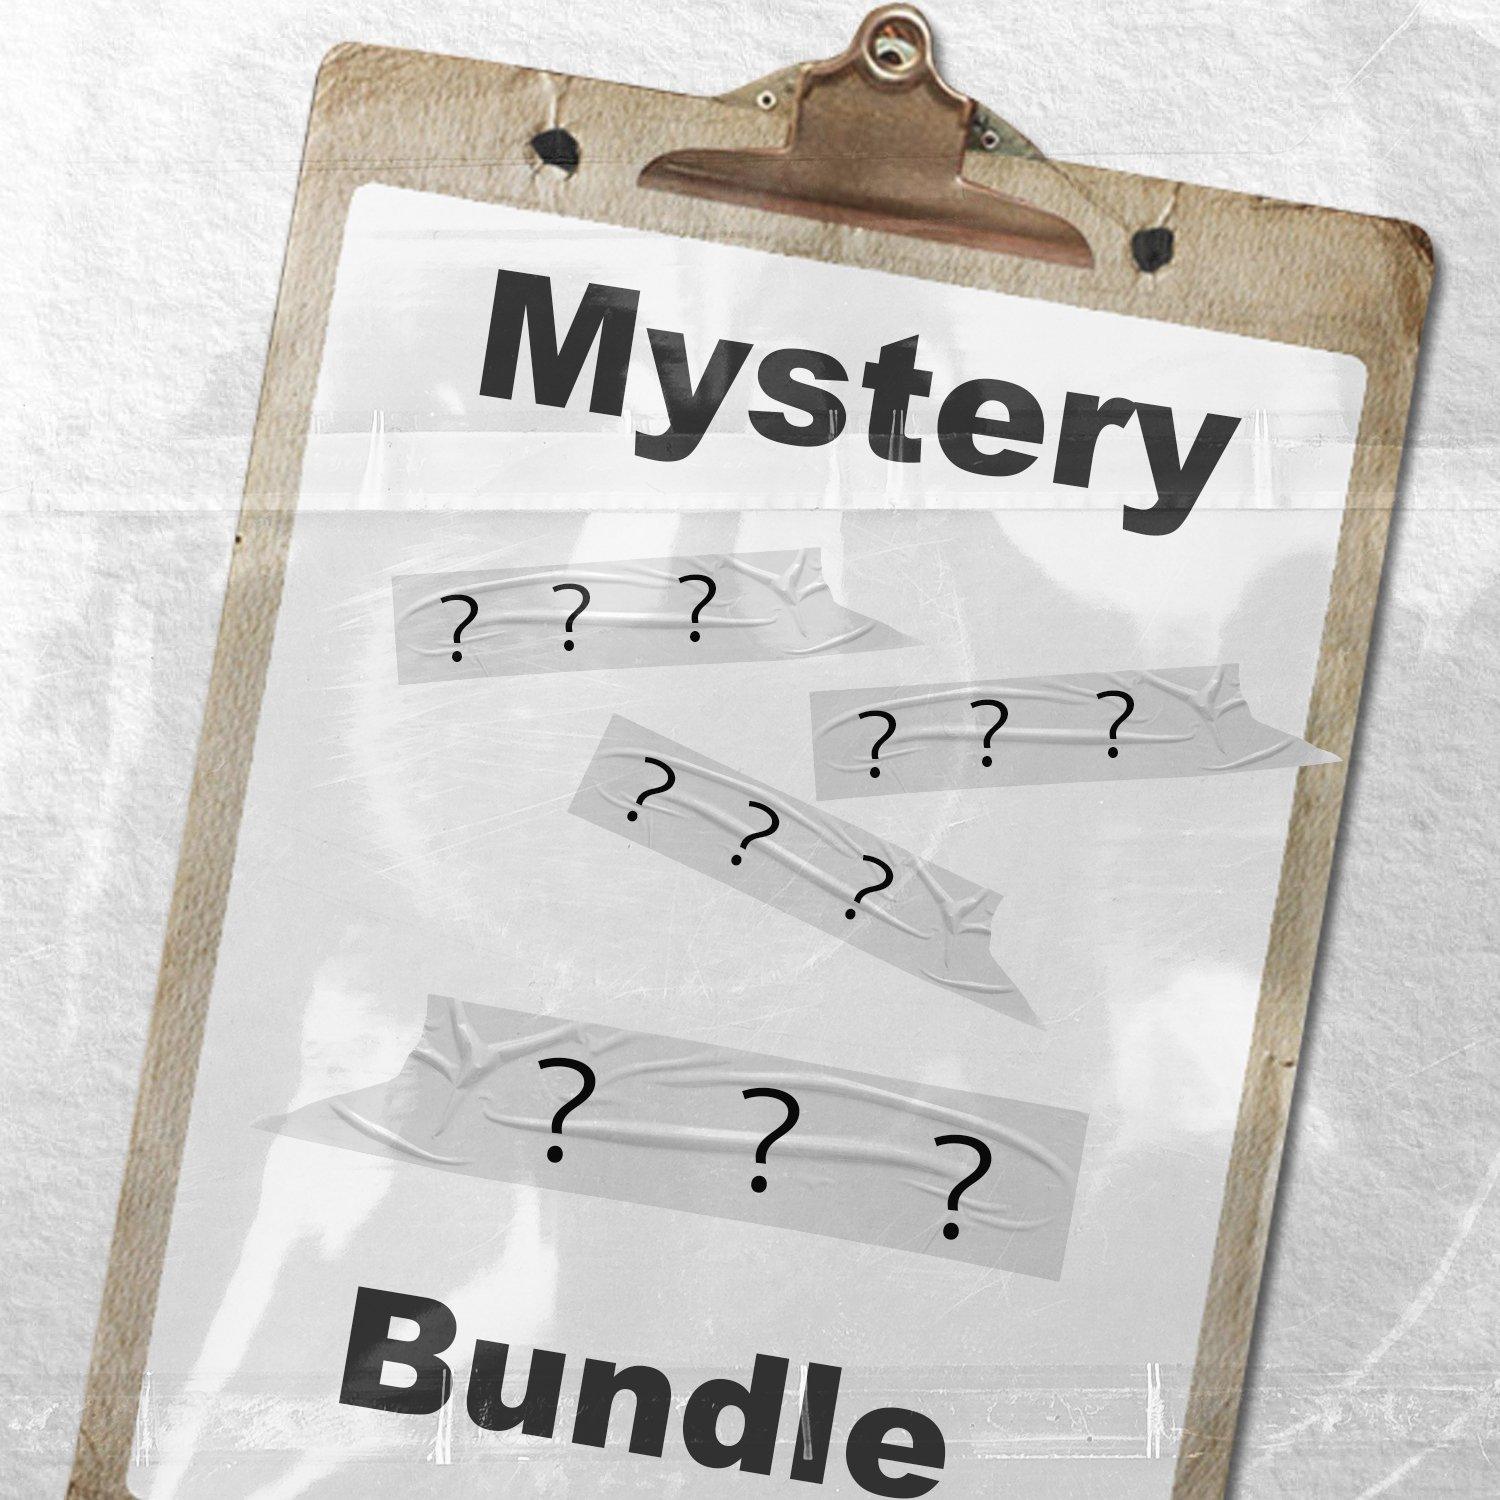 Medium Mystery Bundle - StiCool